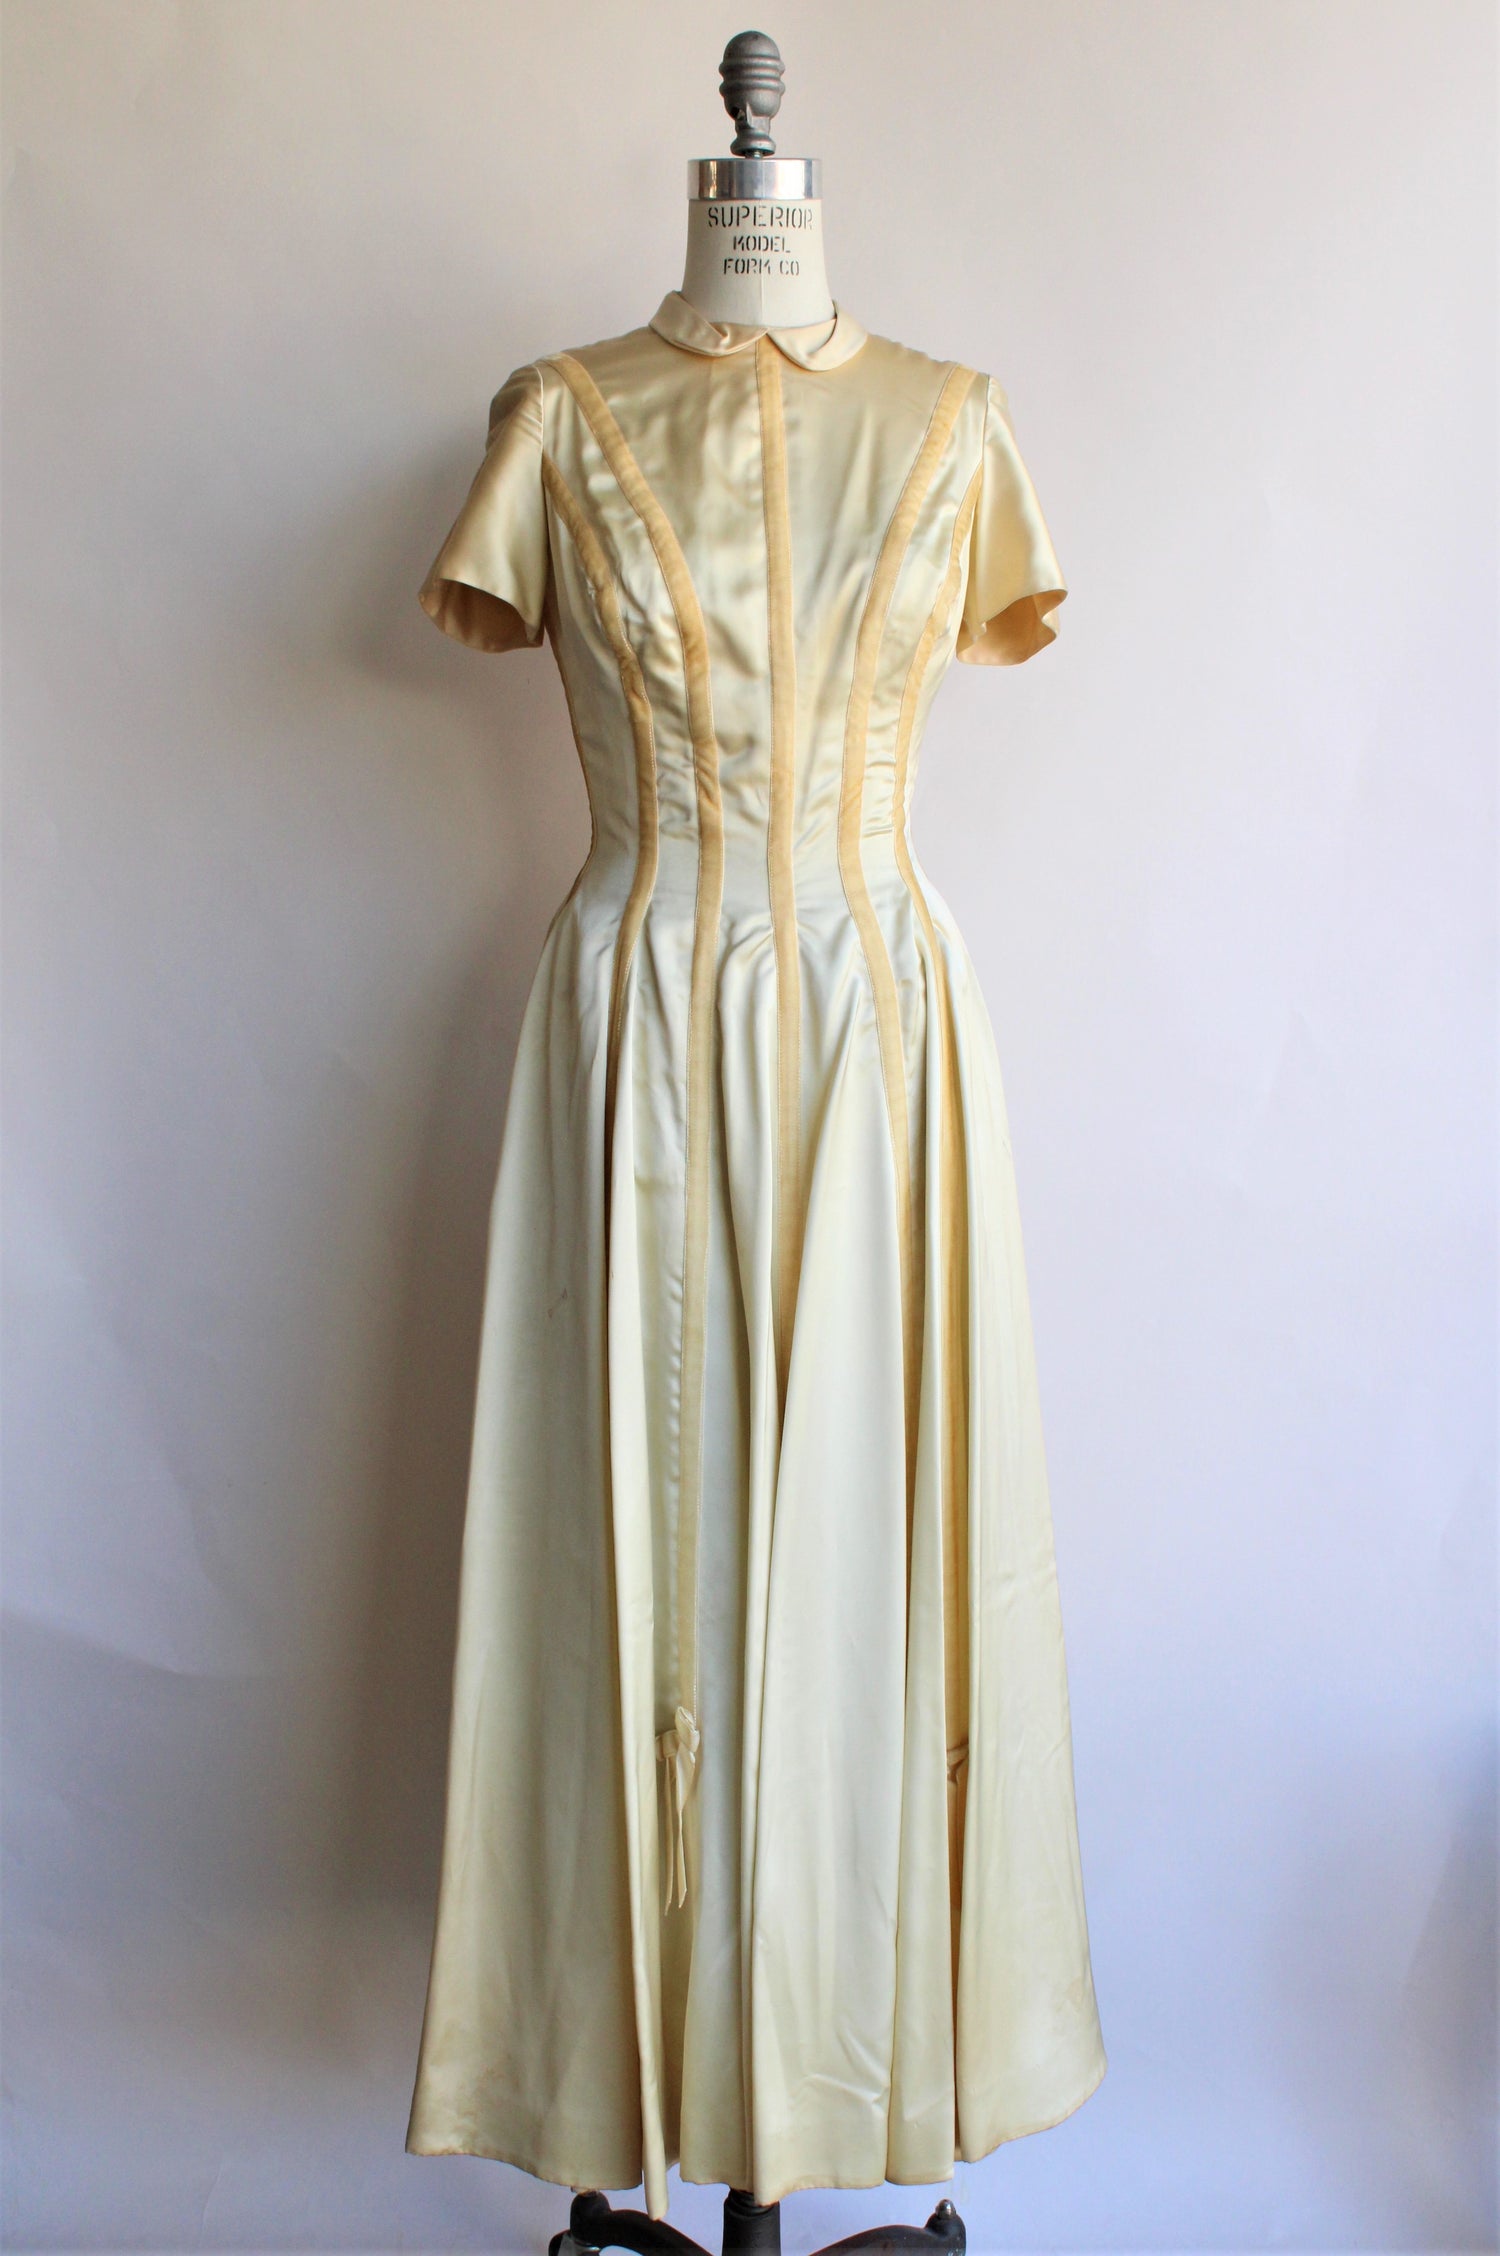 Vintage 1950s Gold Satin Party Dress